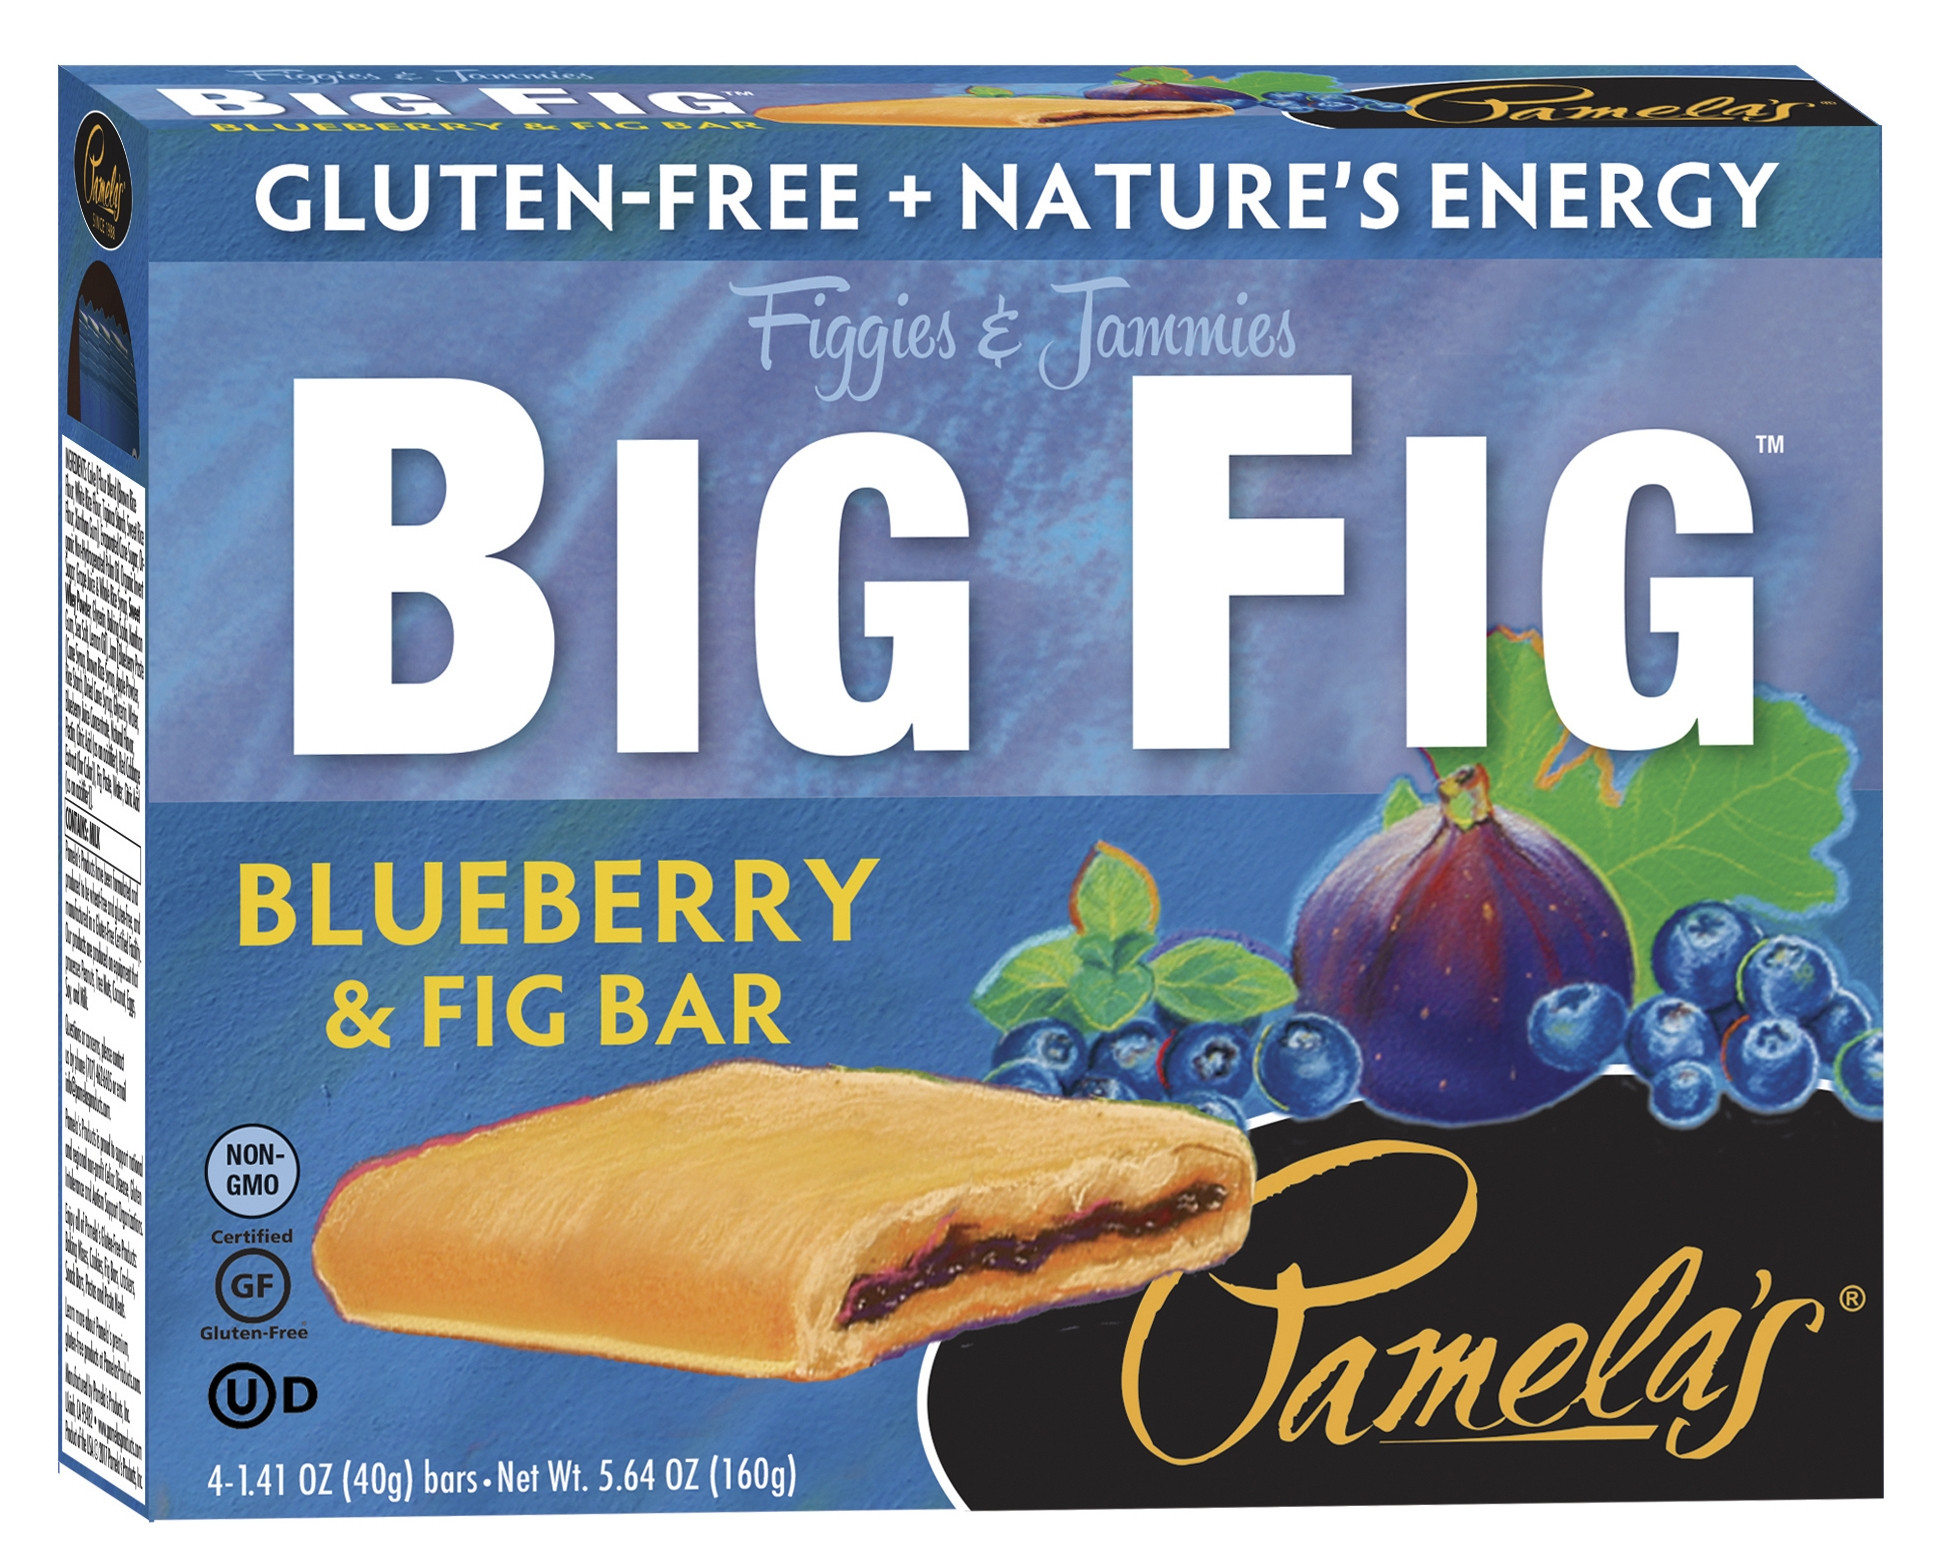 Big Fig -- Blueberry & Fig